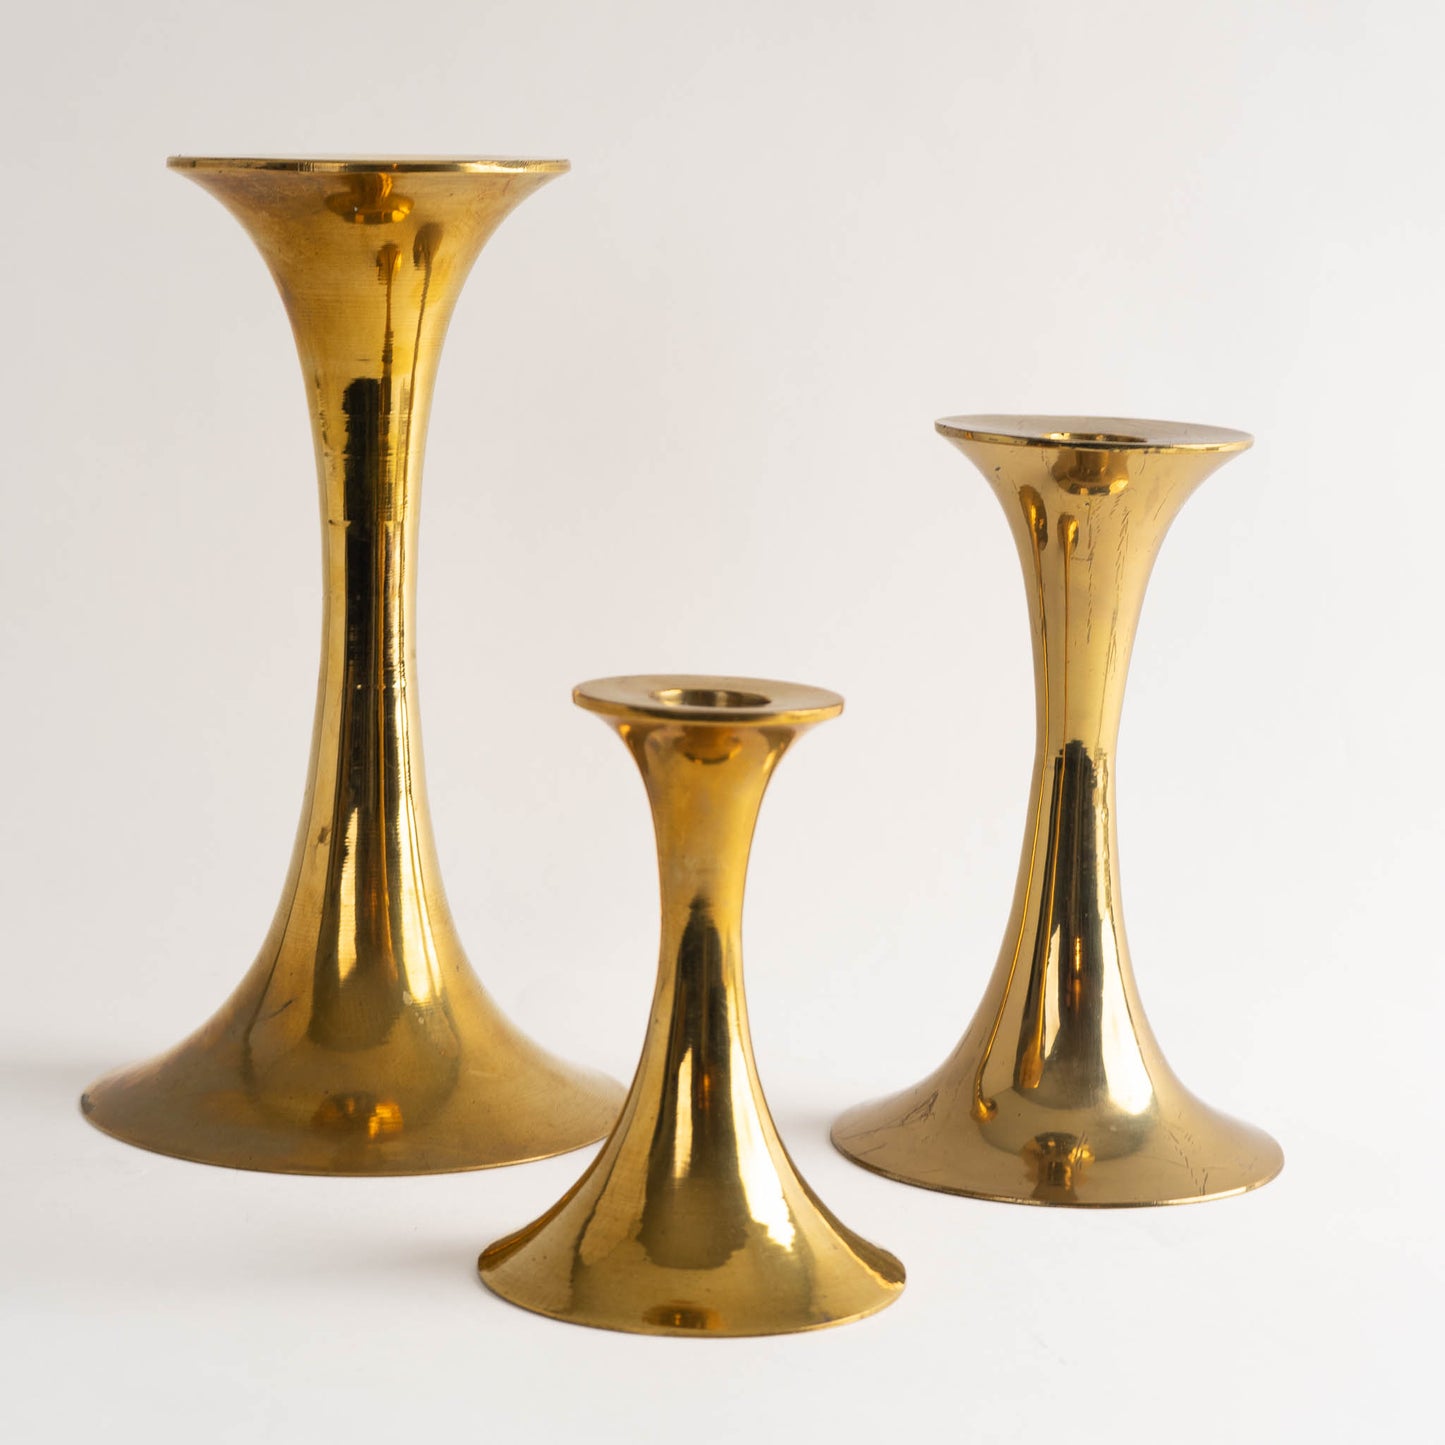 Vintage Brass Fluted Candlestick Holders - Set of 3 - Bamberger's Newark NJ